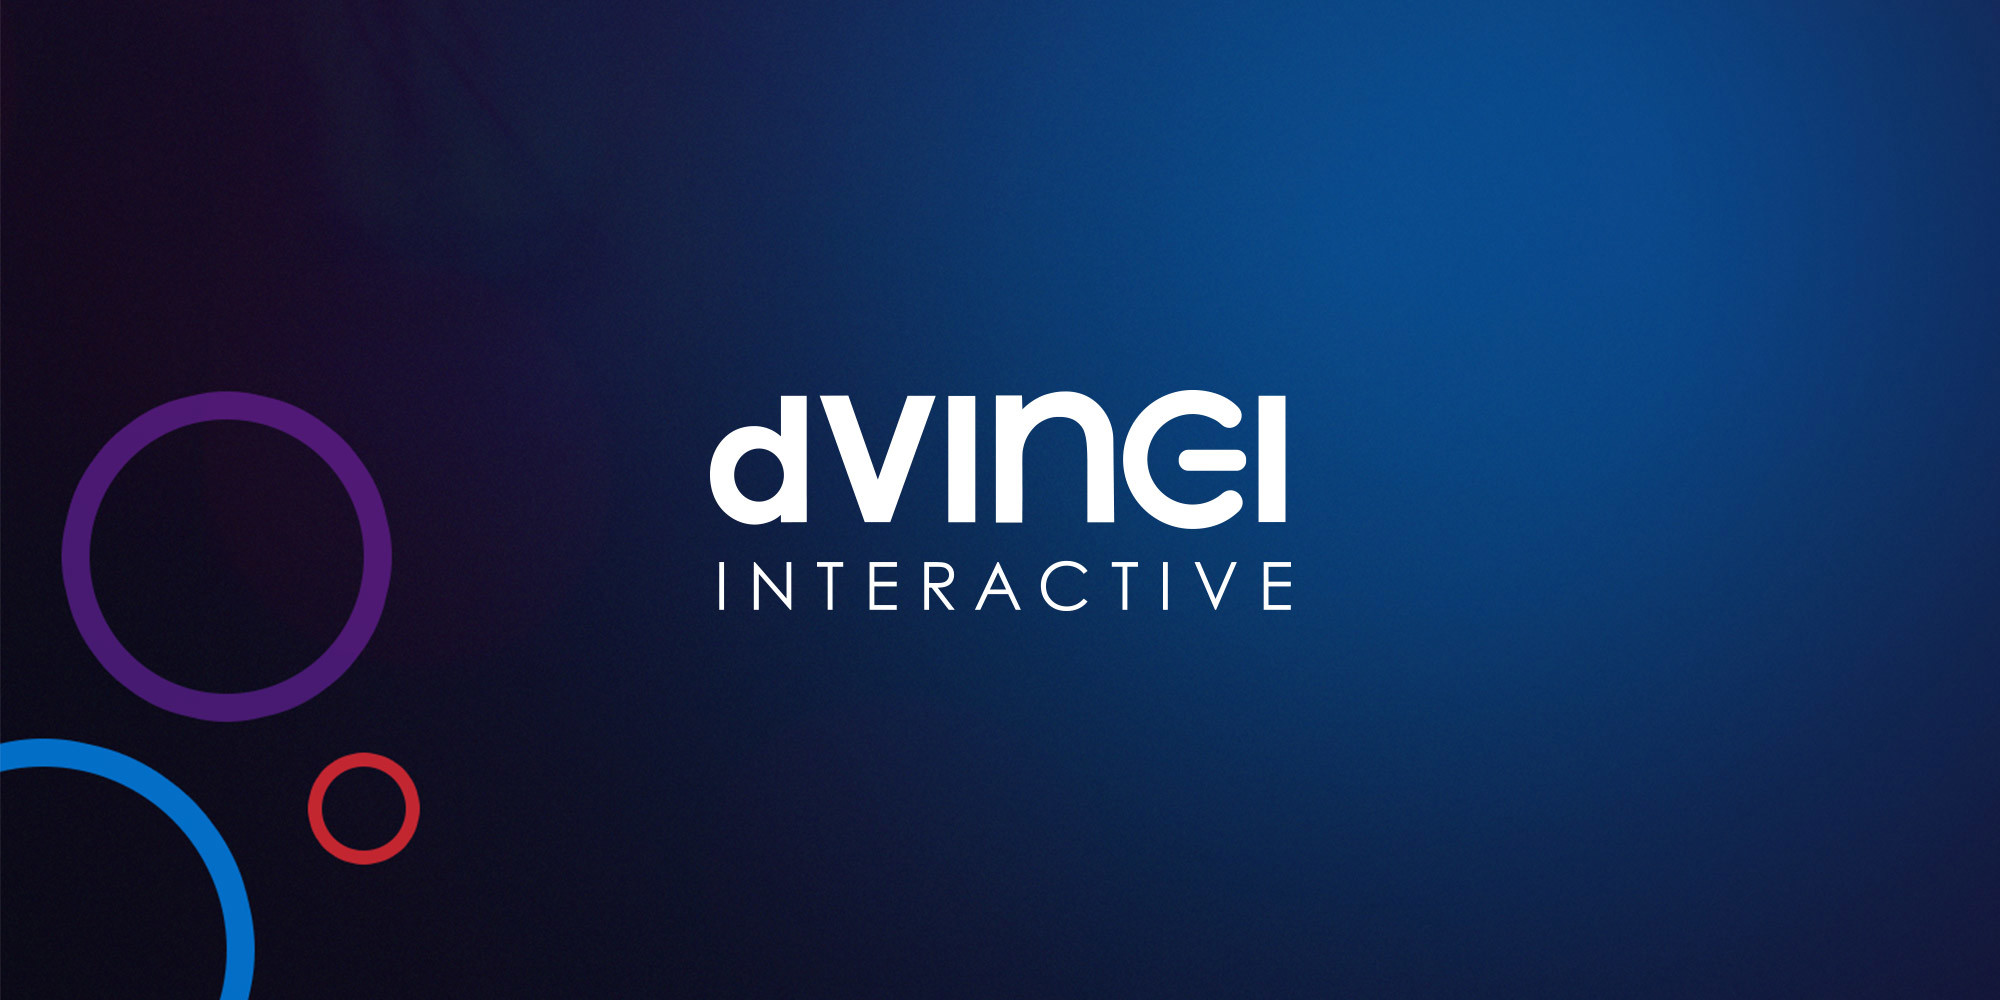 Dvinci Press Release Bg